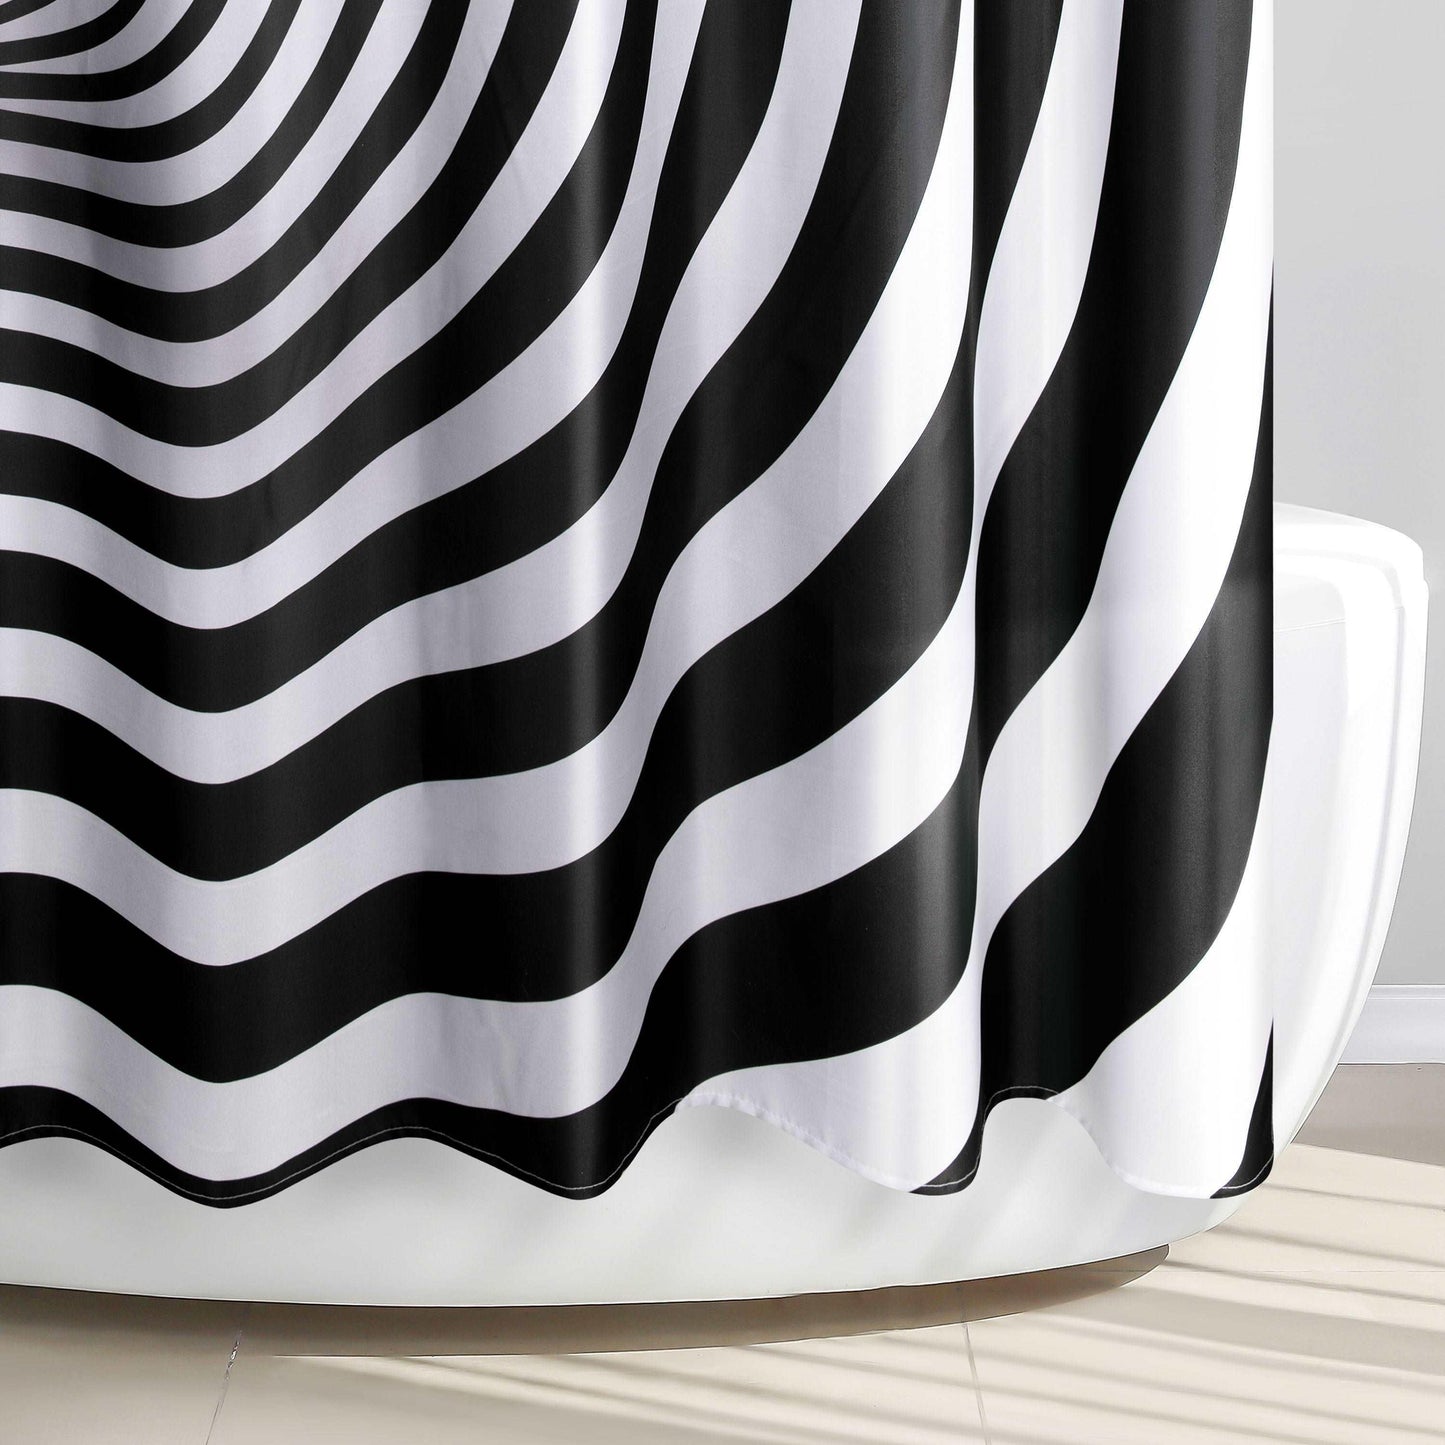 3D Black/White Hole Shower Curtain - Allure Home Creation